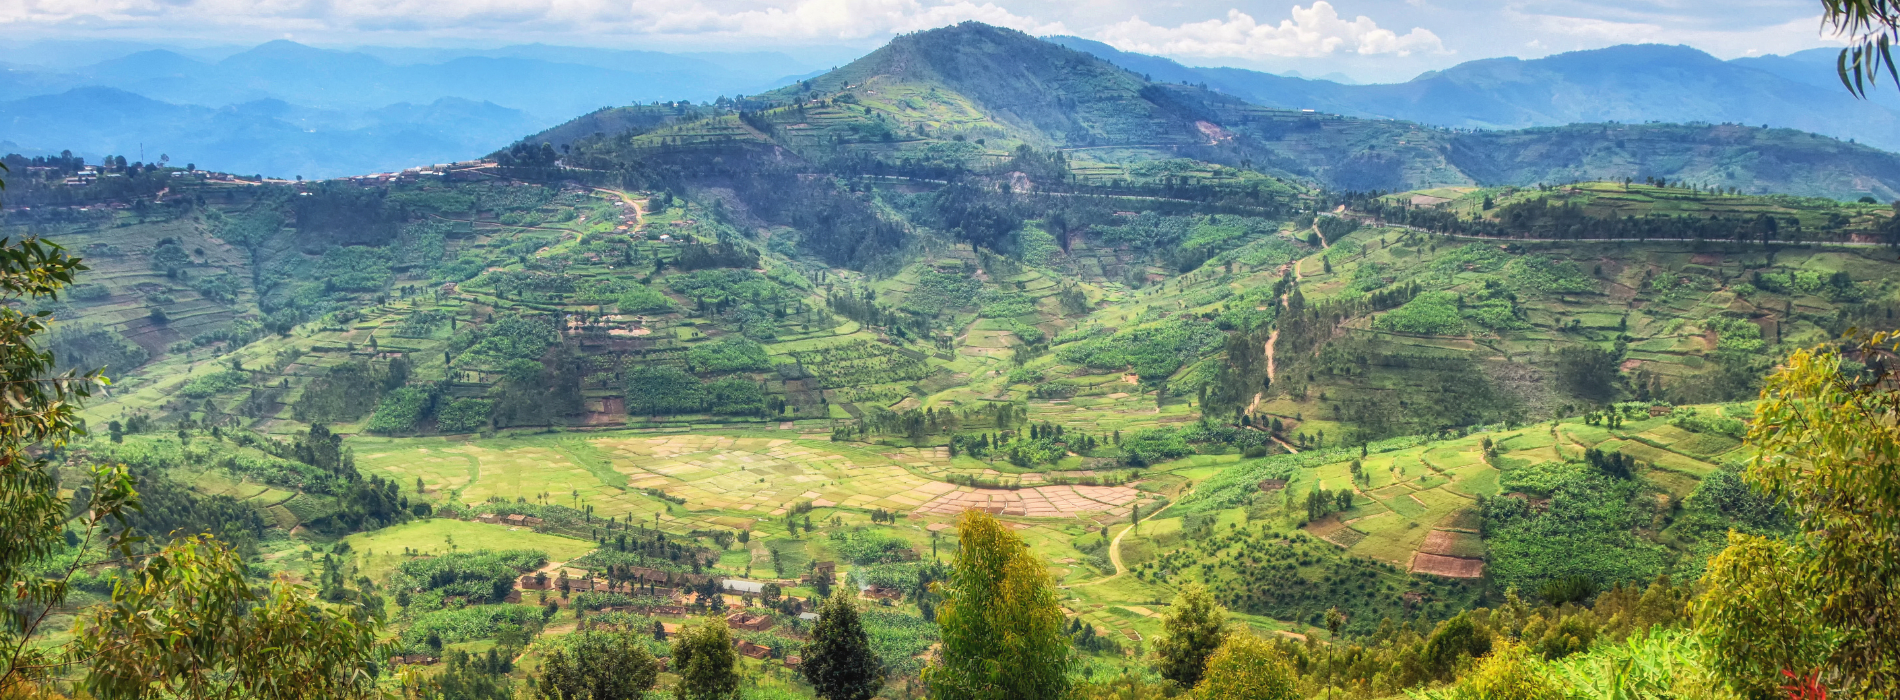 Photo of the rolling hills of Rwanda